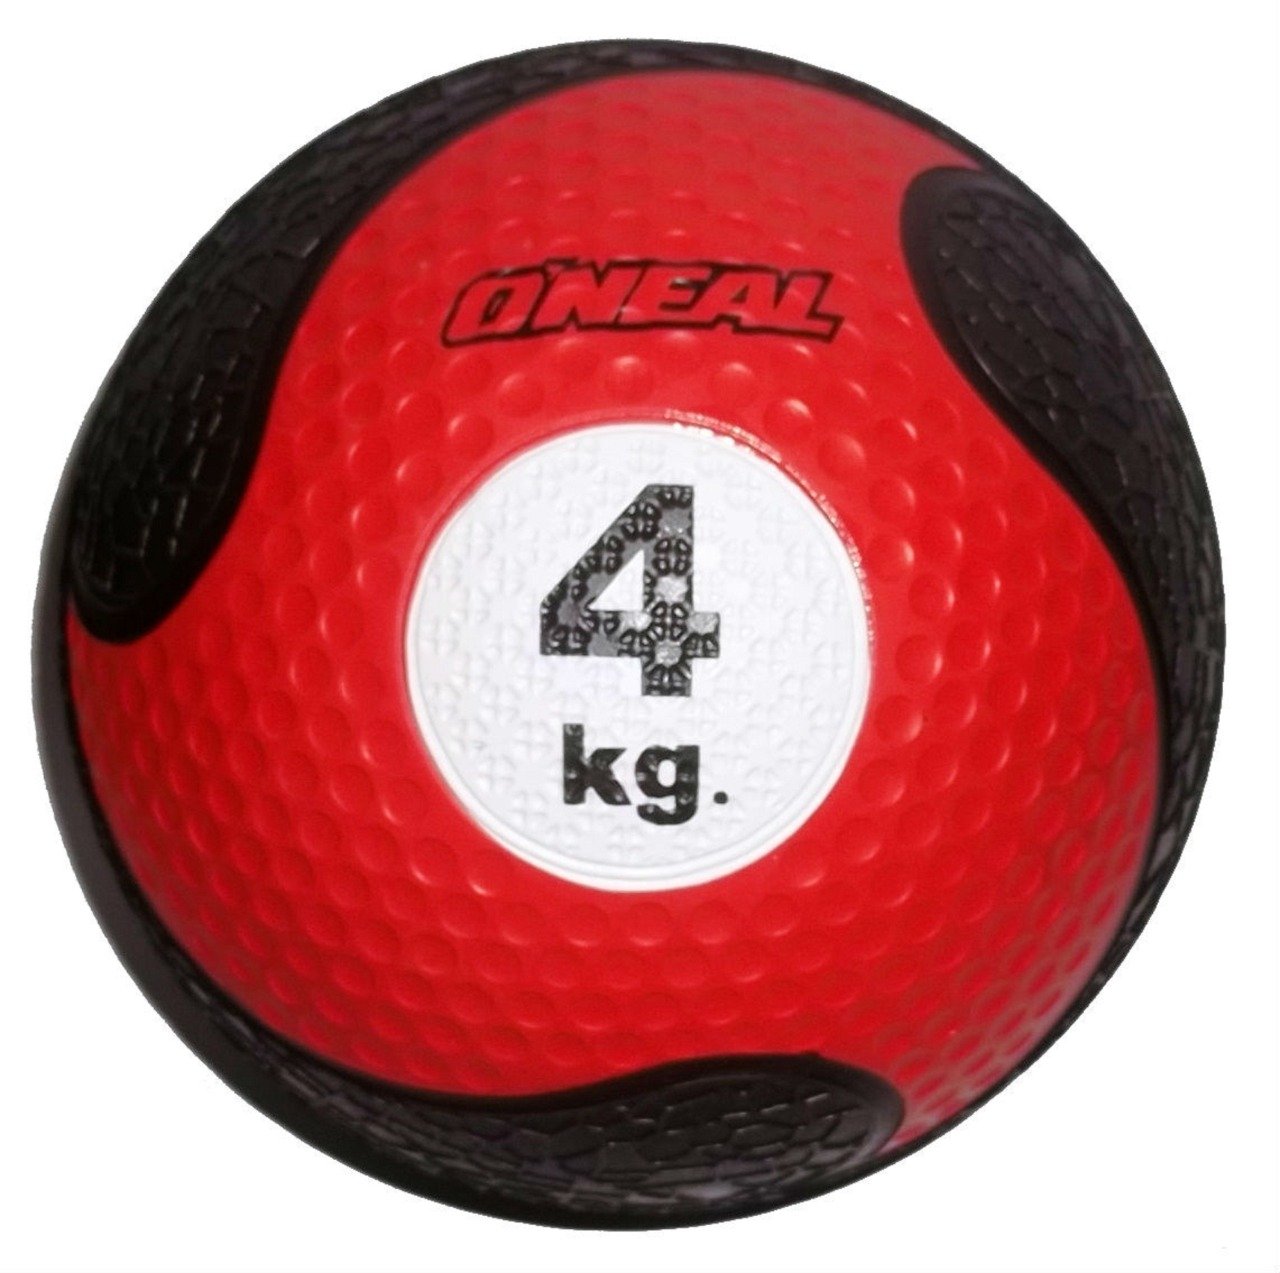 Medicine Ball 4Kg. - Oneal